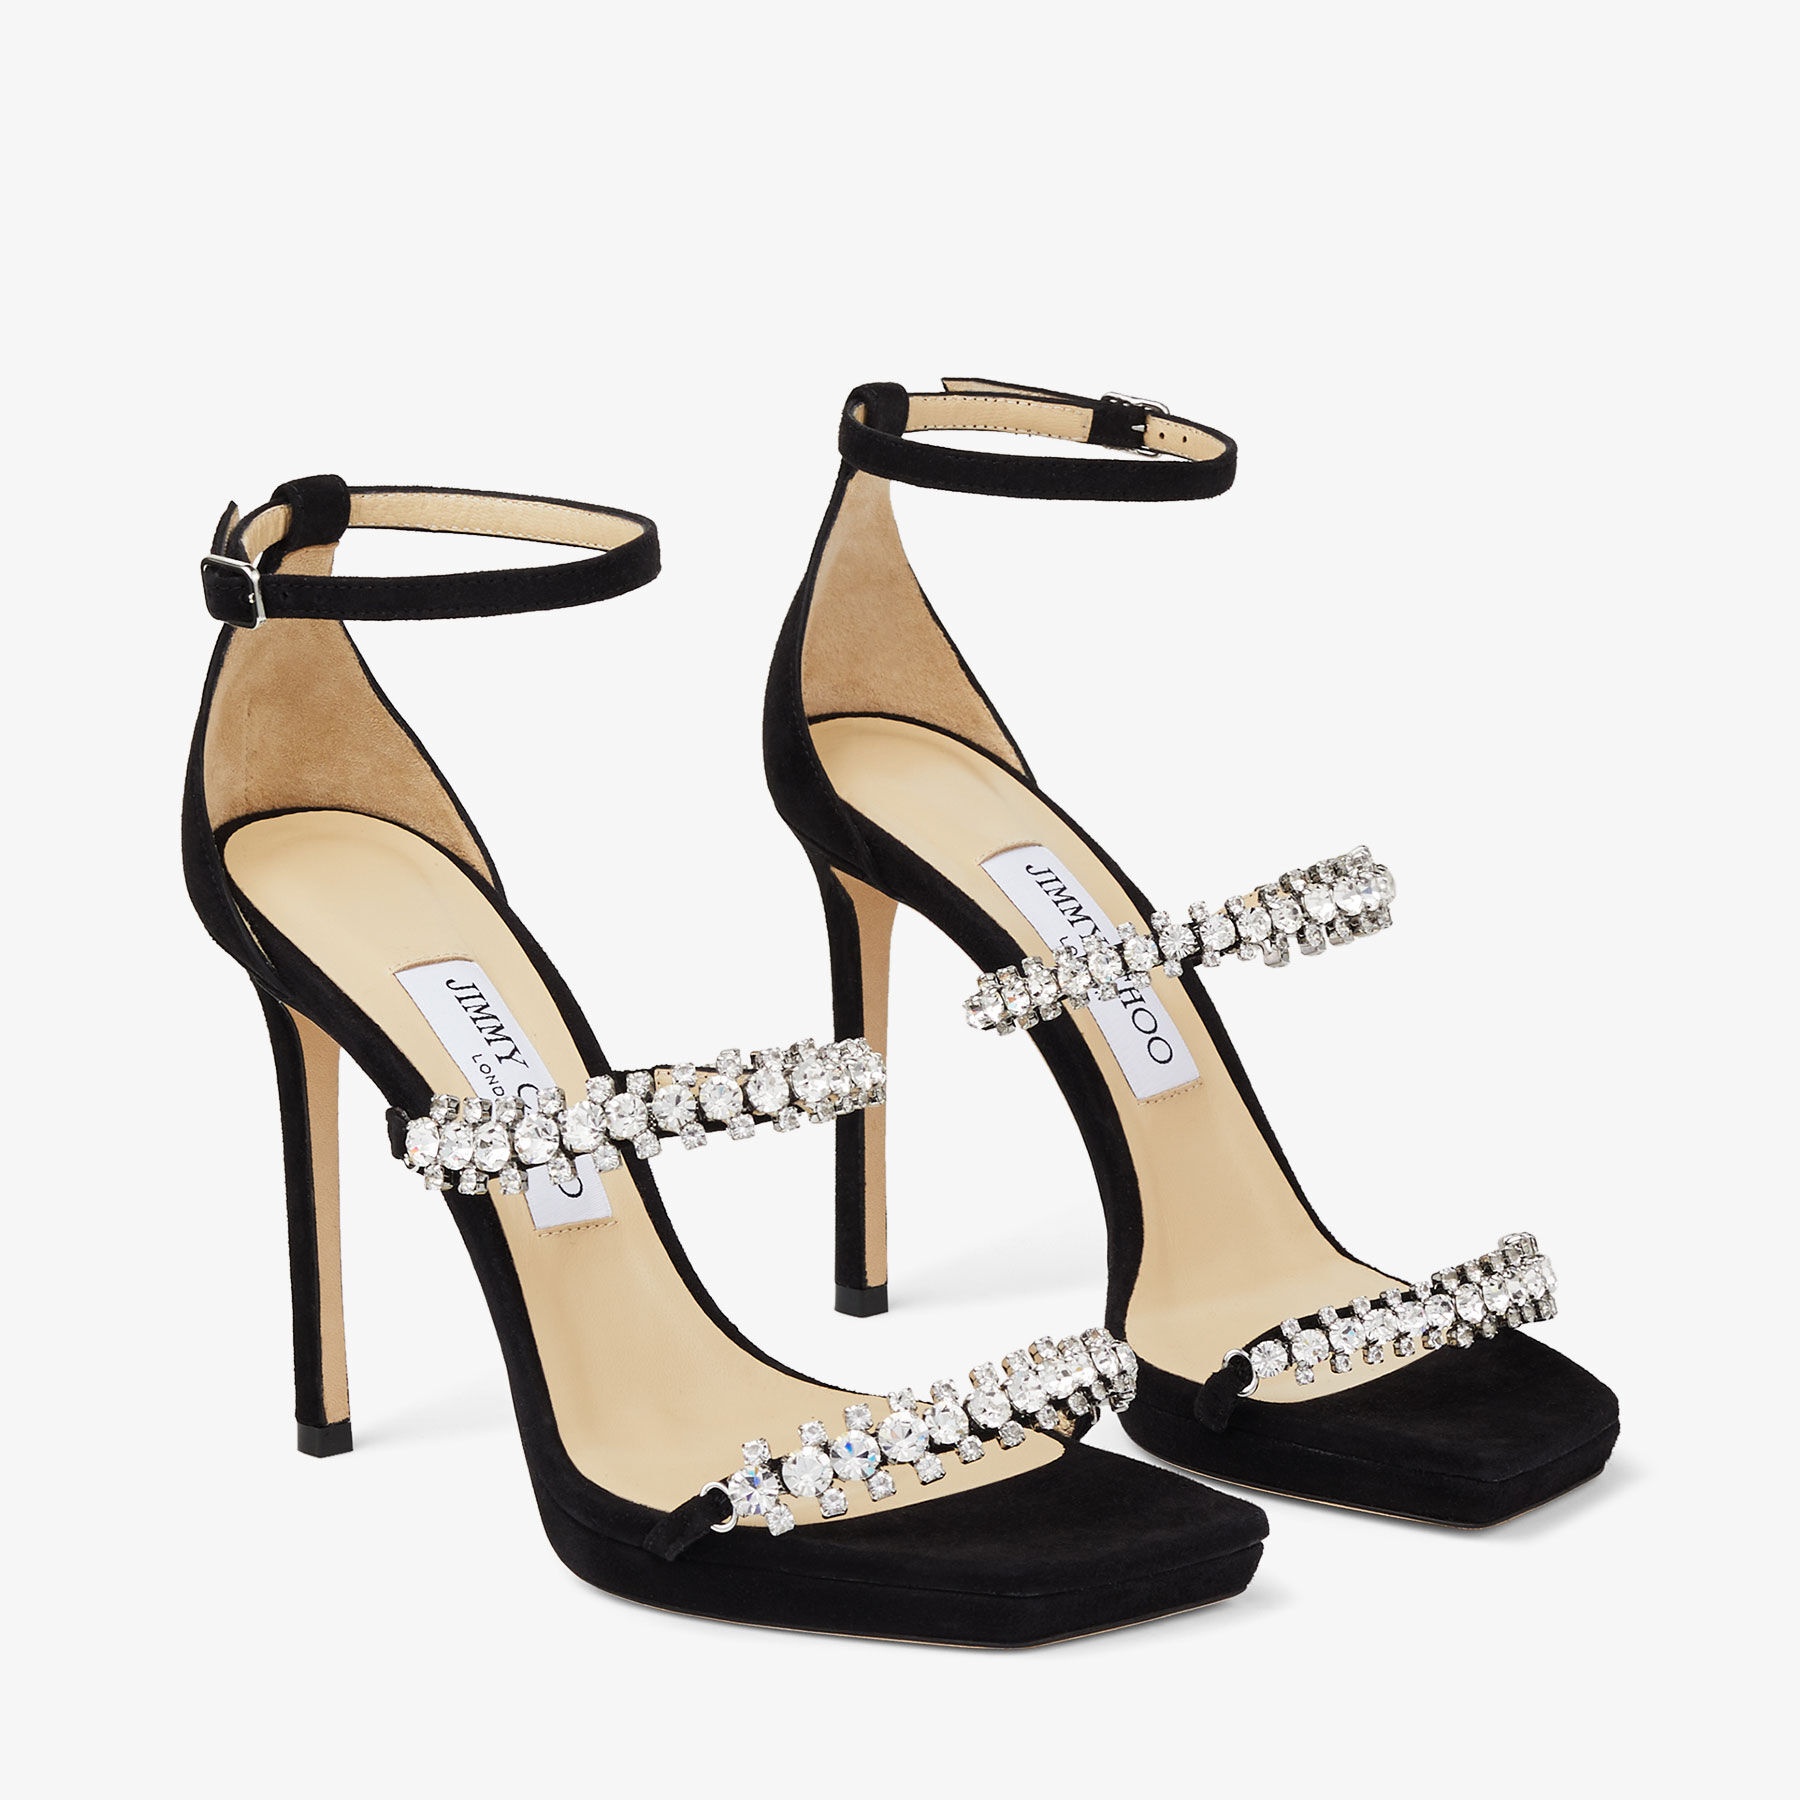 Bing Sandal 105
Black Suede Sandals with Crystal Straps - 3